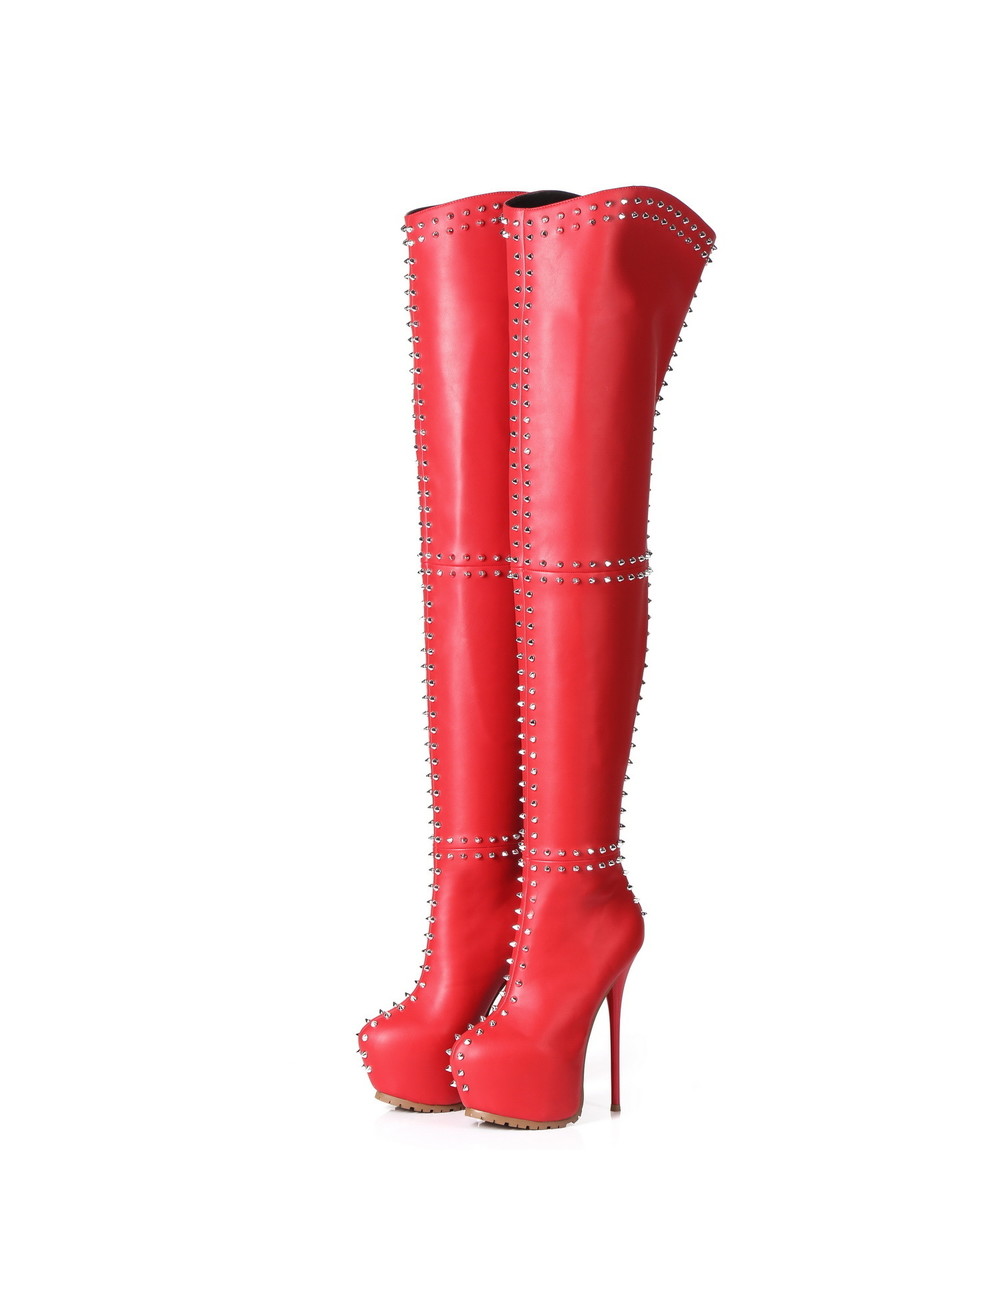 Red studded thigh boots Giaro SOPHIA 16cm heels profile - Giaro High ...